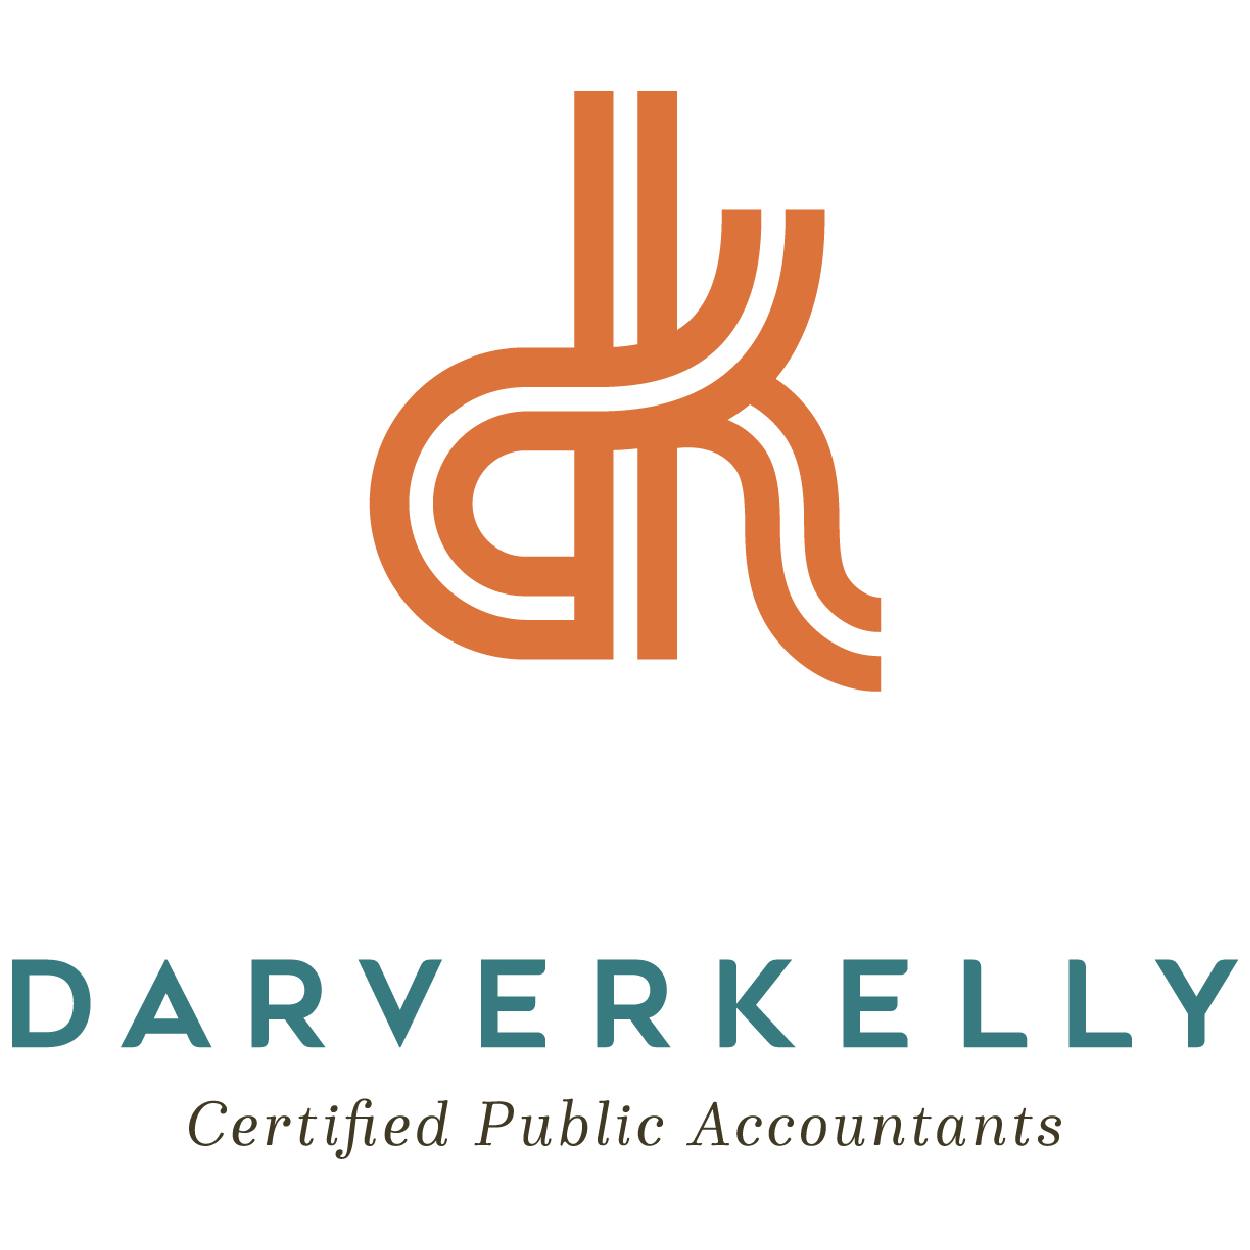 DarverKelly